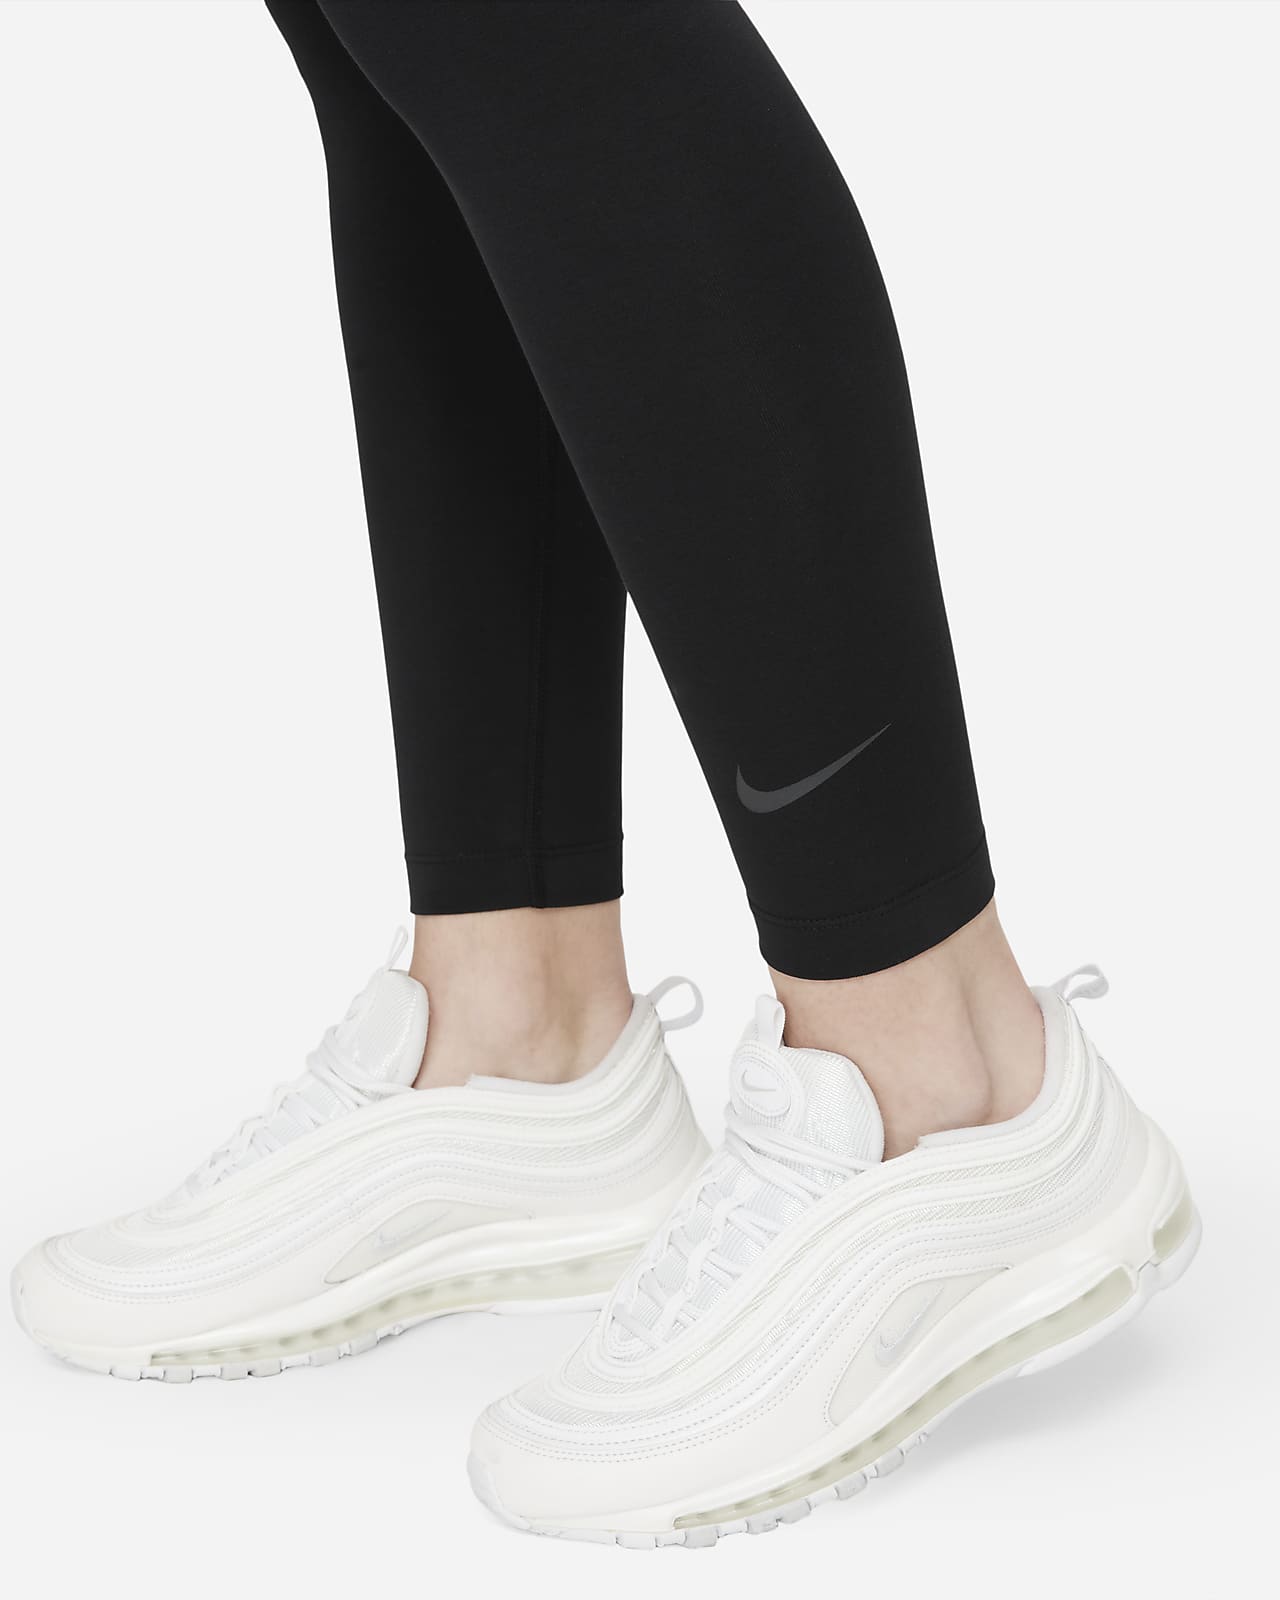 Leggings de cintura alta para mujer Nike Sportswear Club.